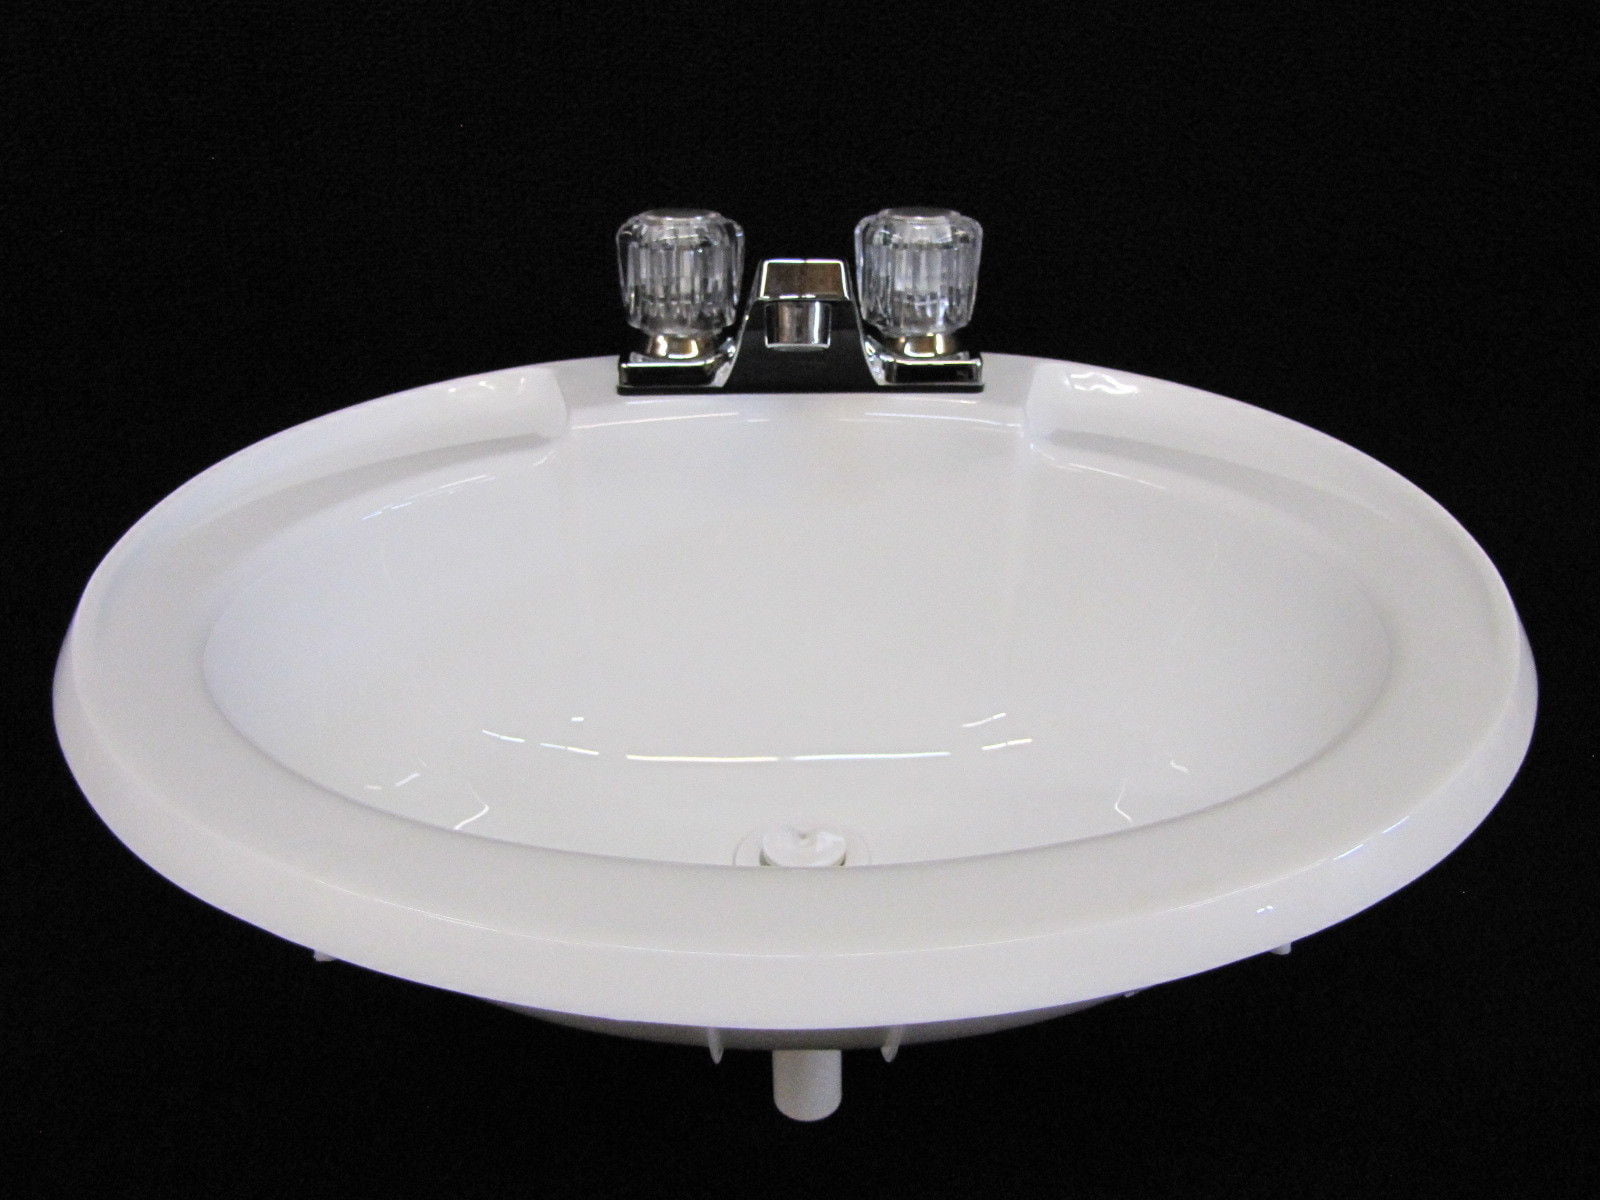 Mobile Home RV Parts Bathroom Lav White Sink w/ Chrome Faucet 20x17 inc hardware 